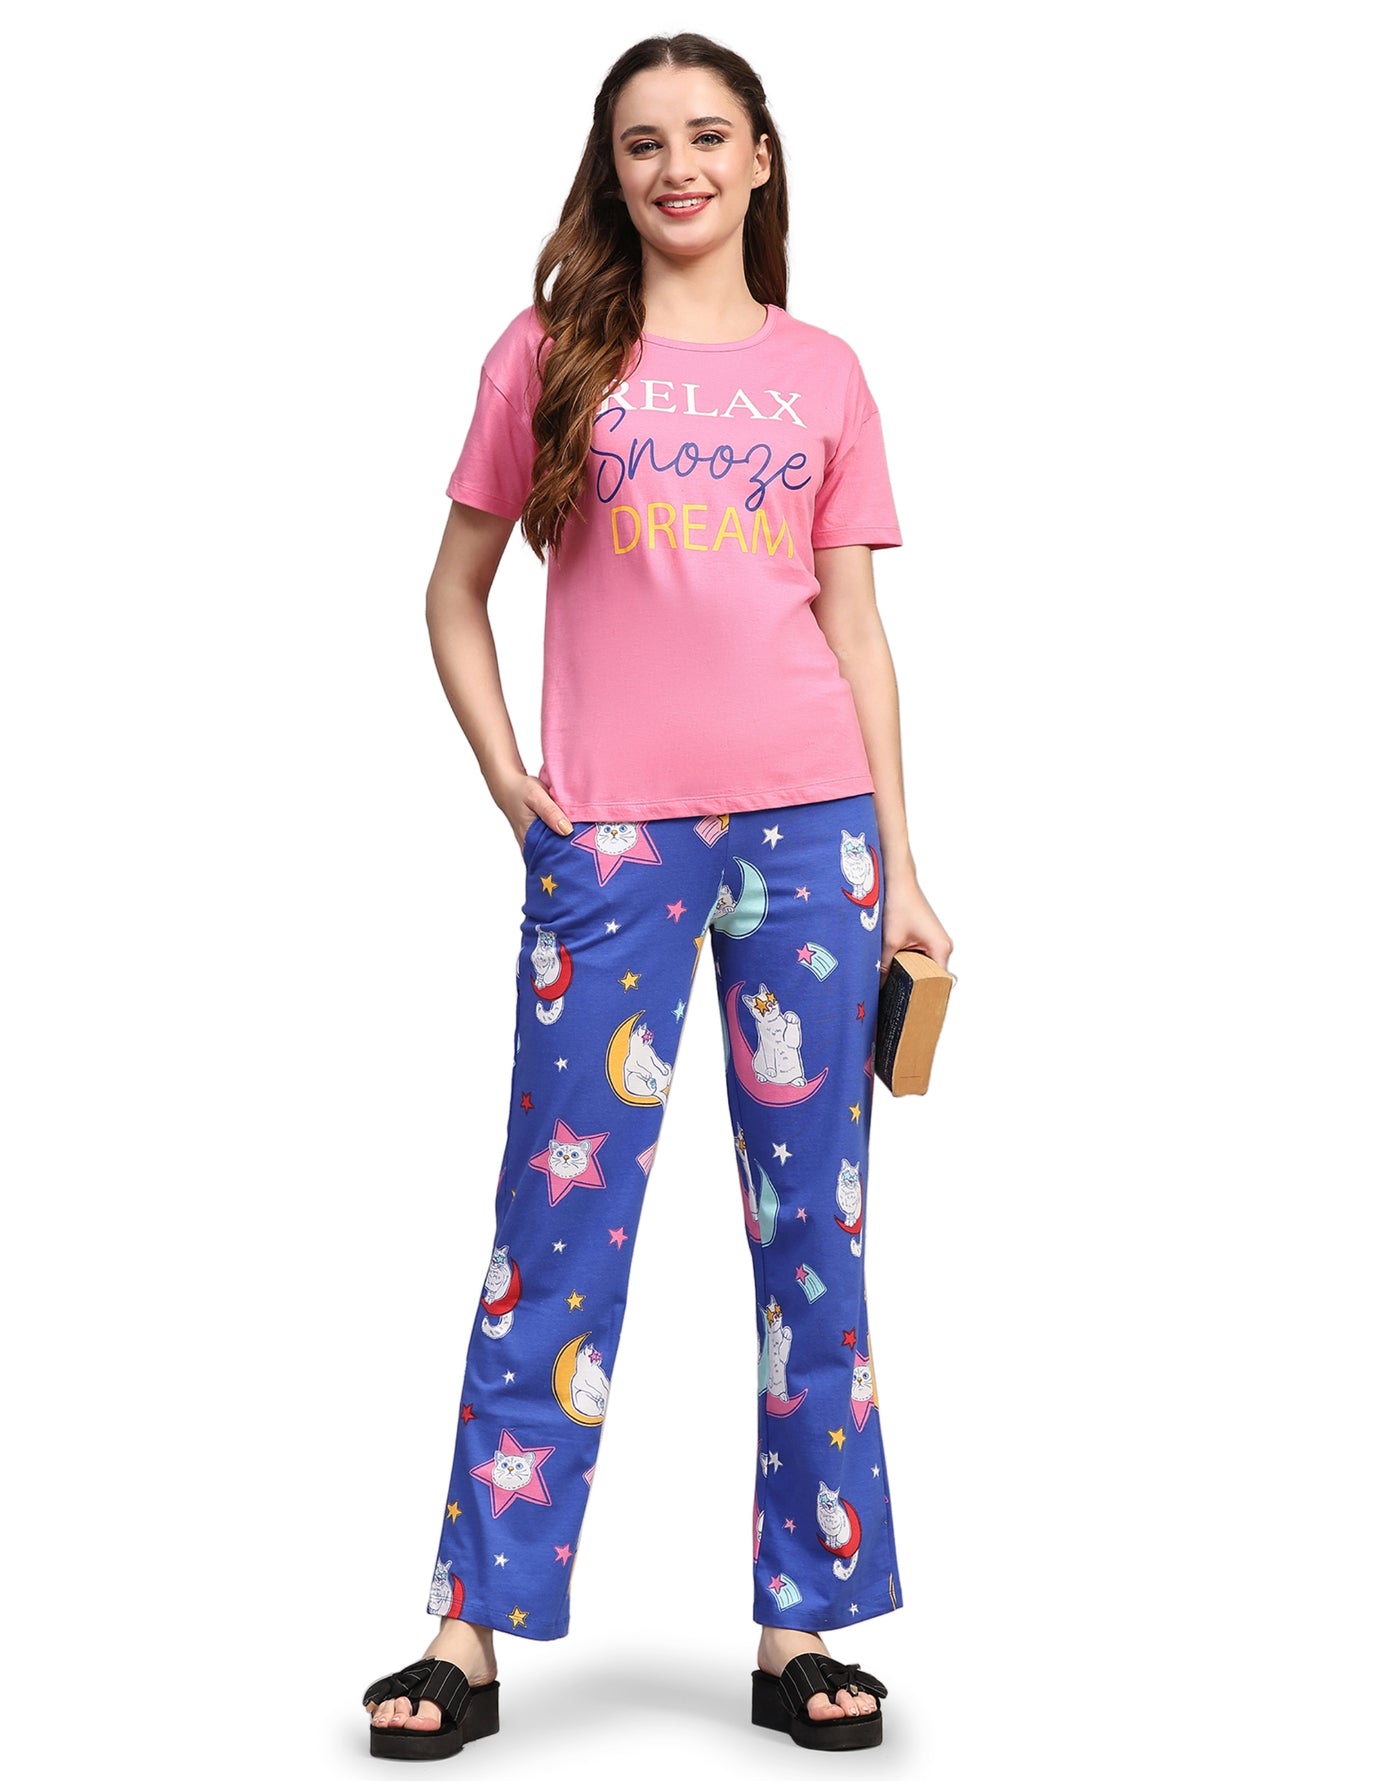 Pyjama Set for Women-Pink Tee & Blue Cat Print